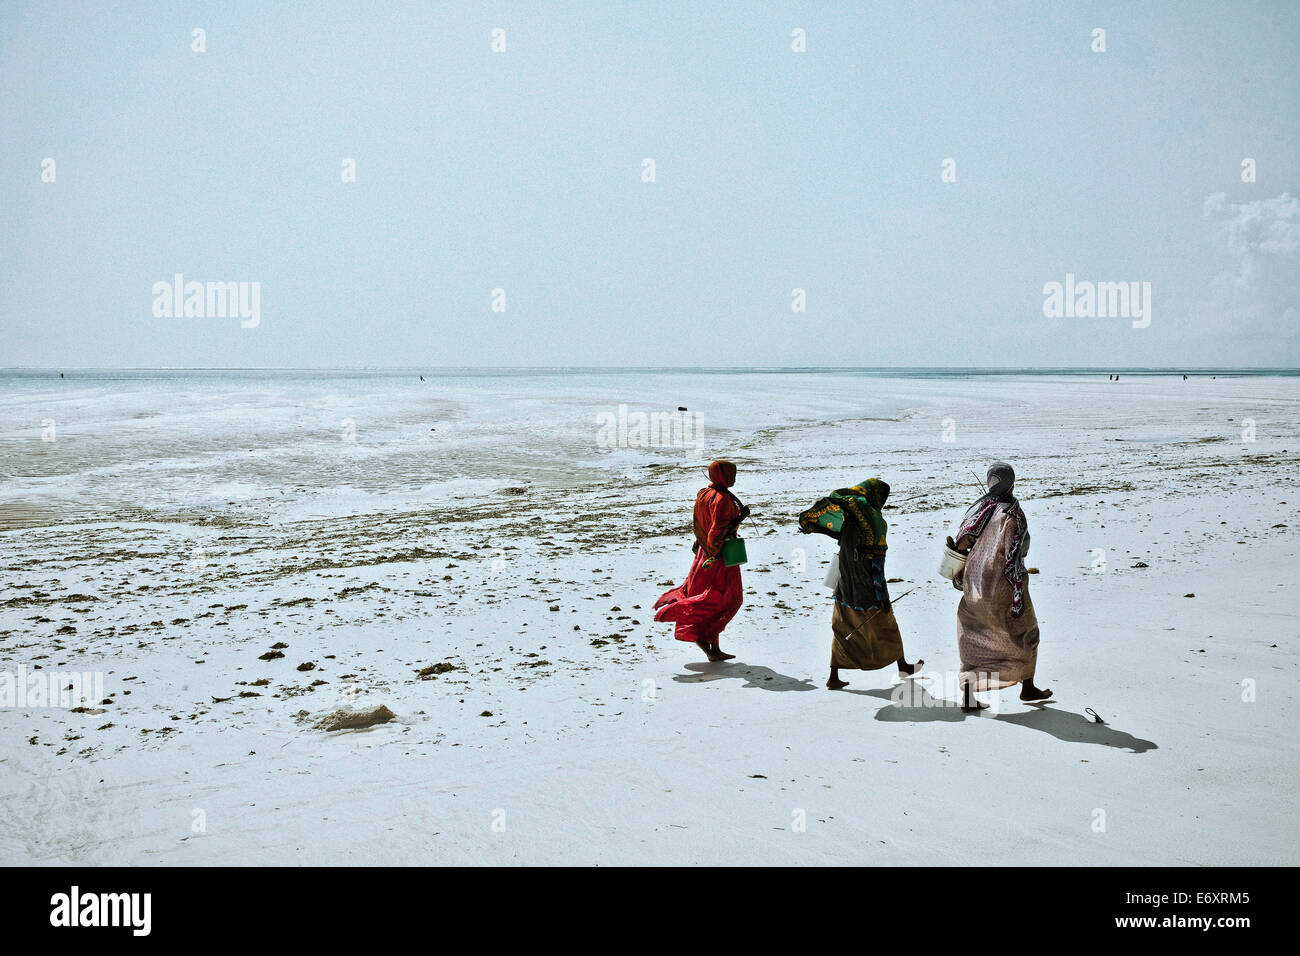 Women walking along the beach, Zanzibar, Tanzania, Africa Stock Photo